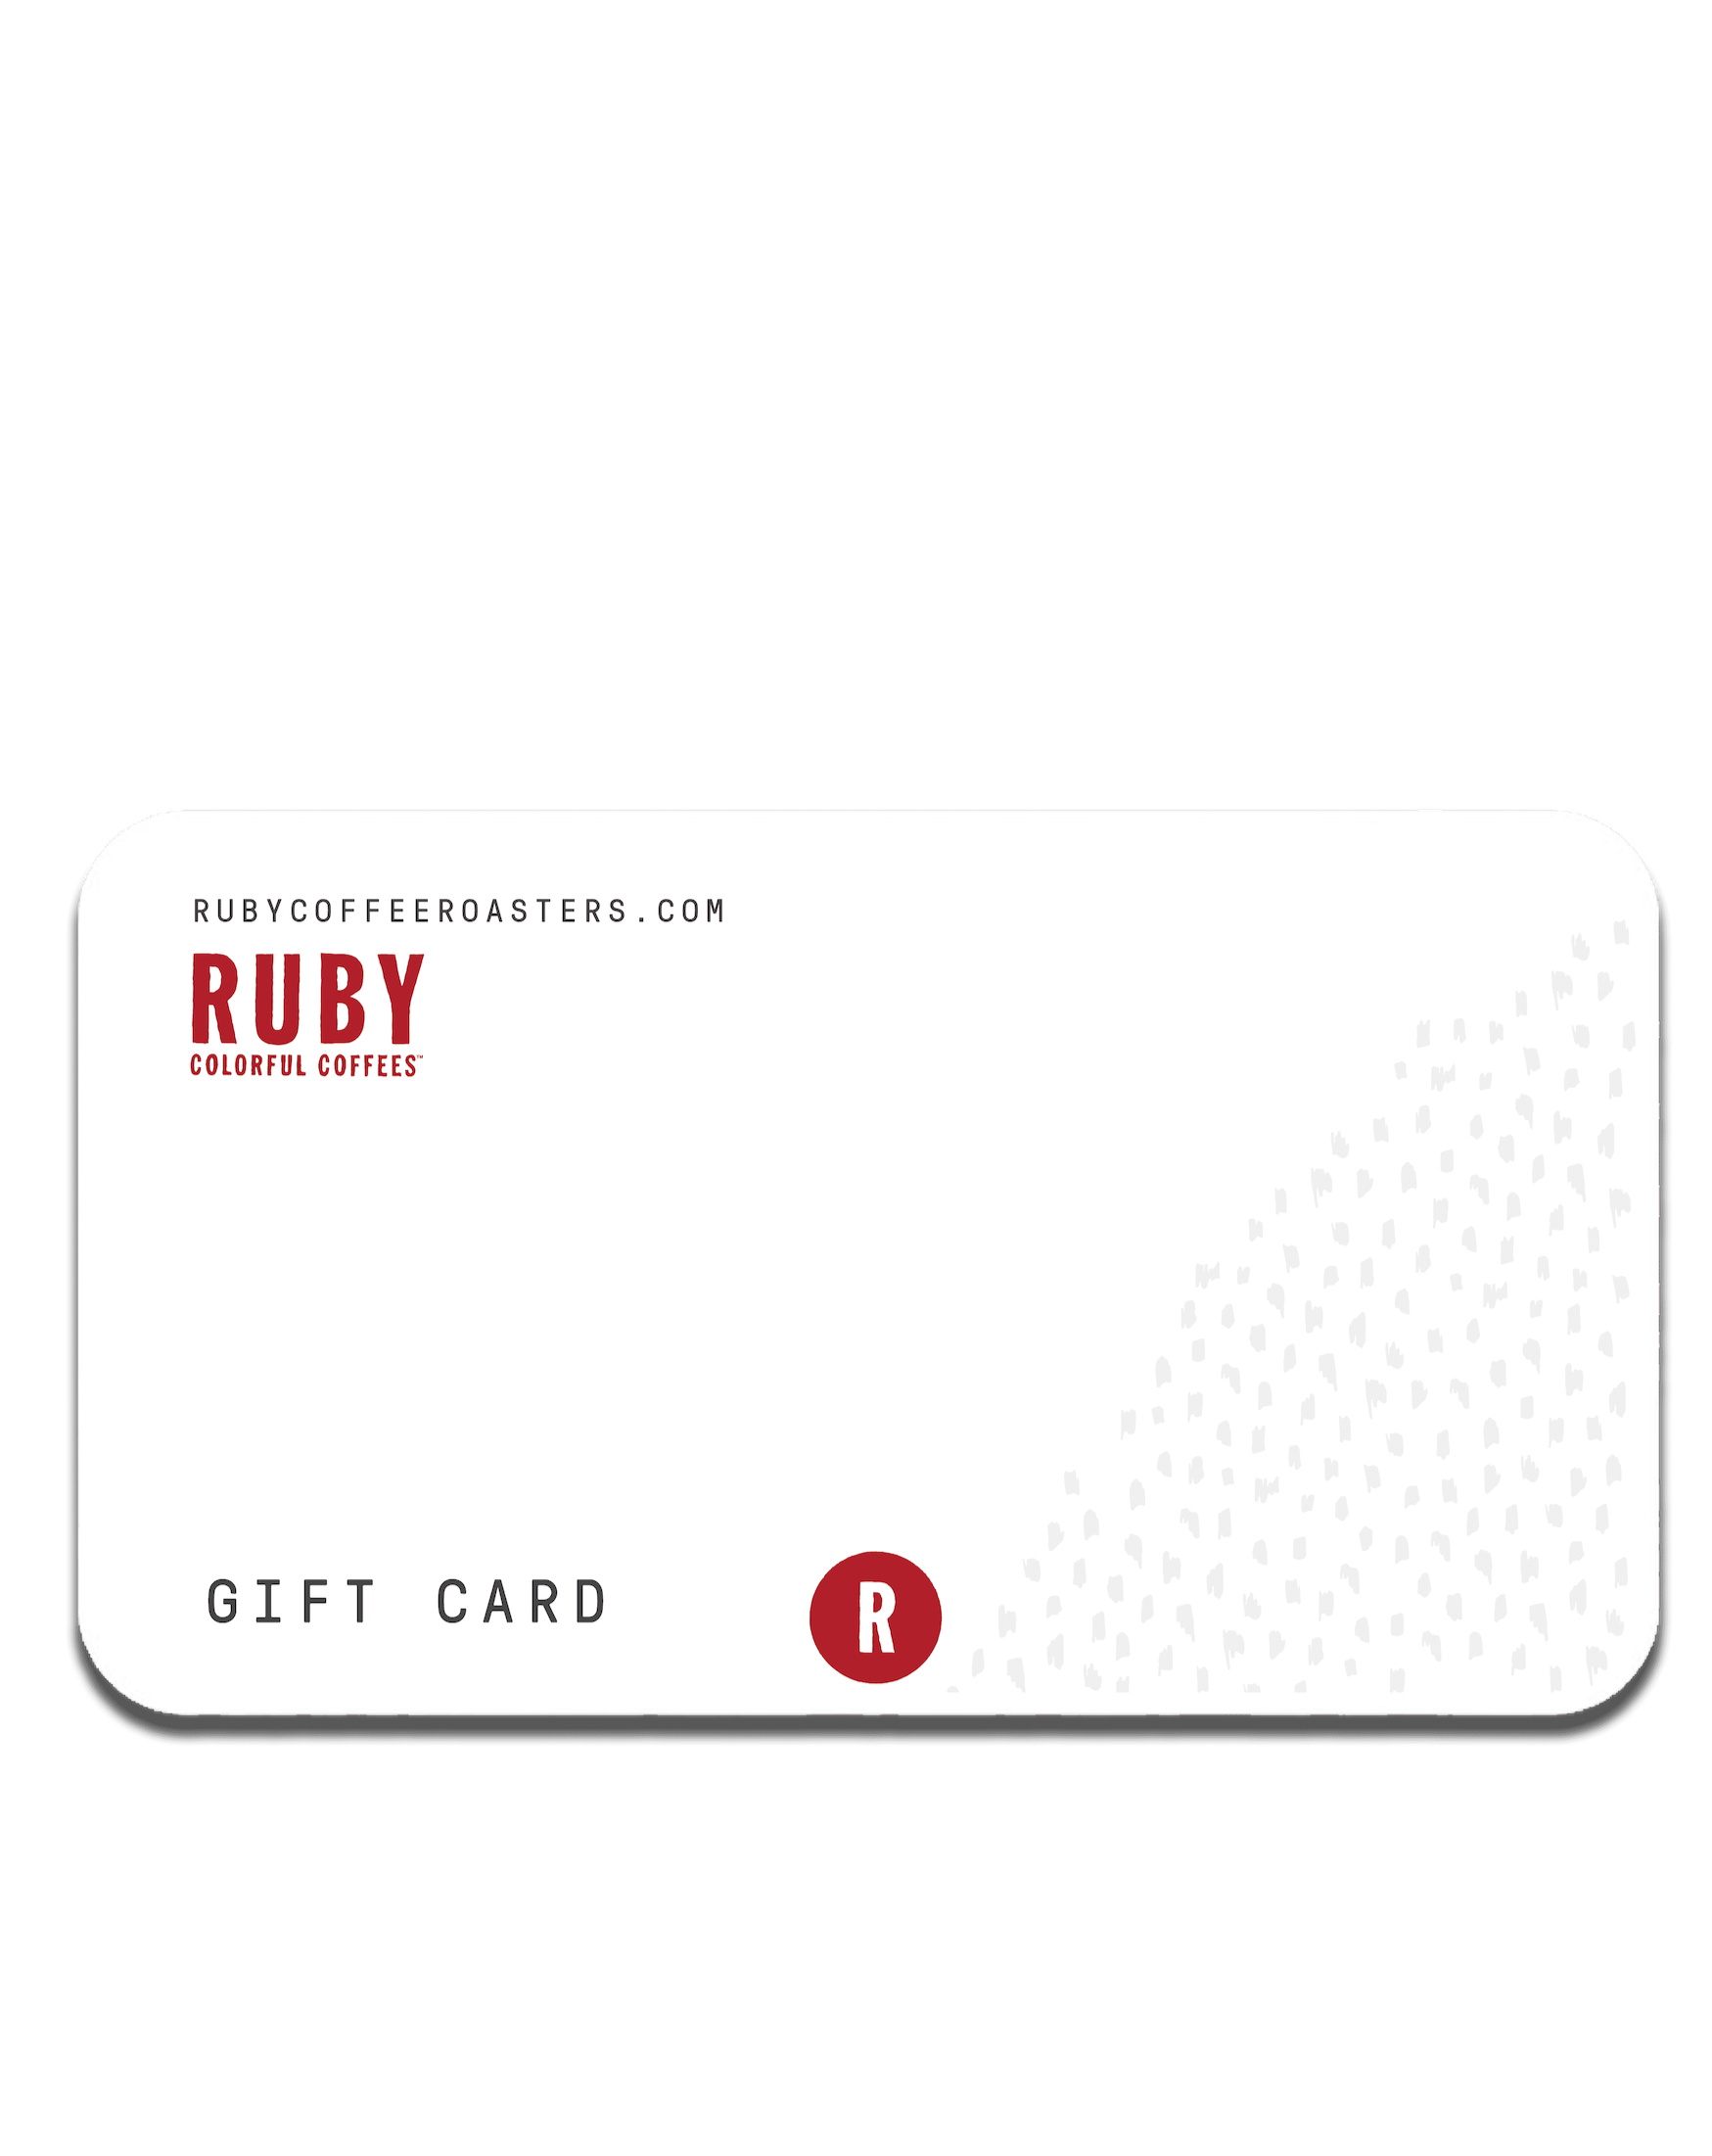 Order  Red Bay Coffee Roasters eGift Cards